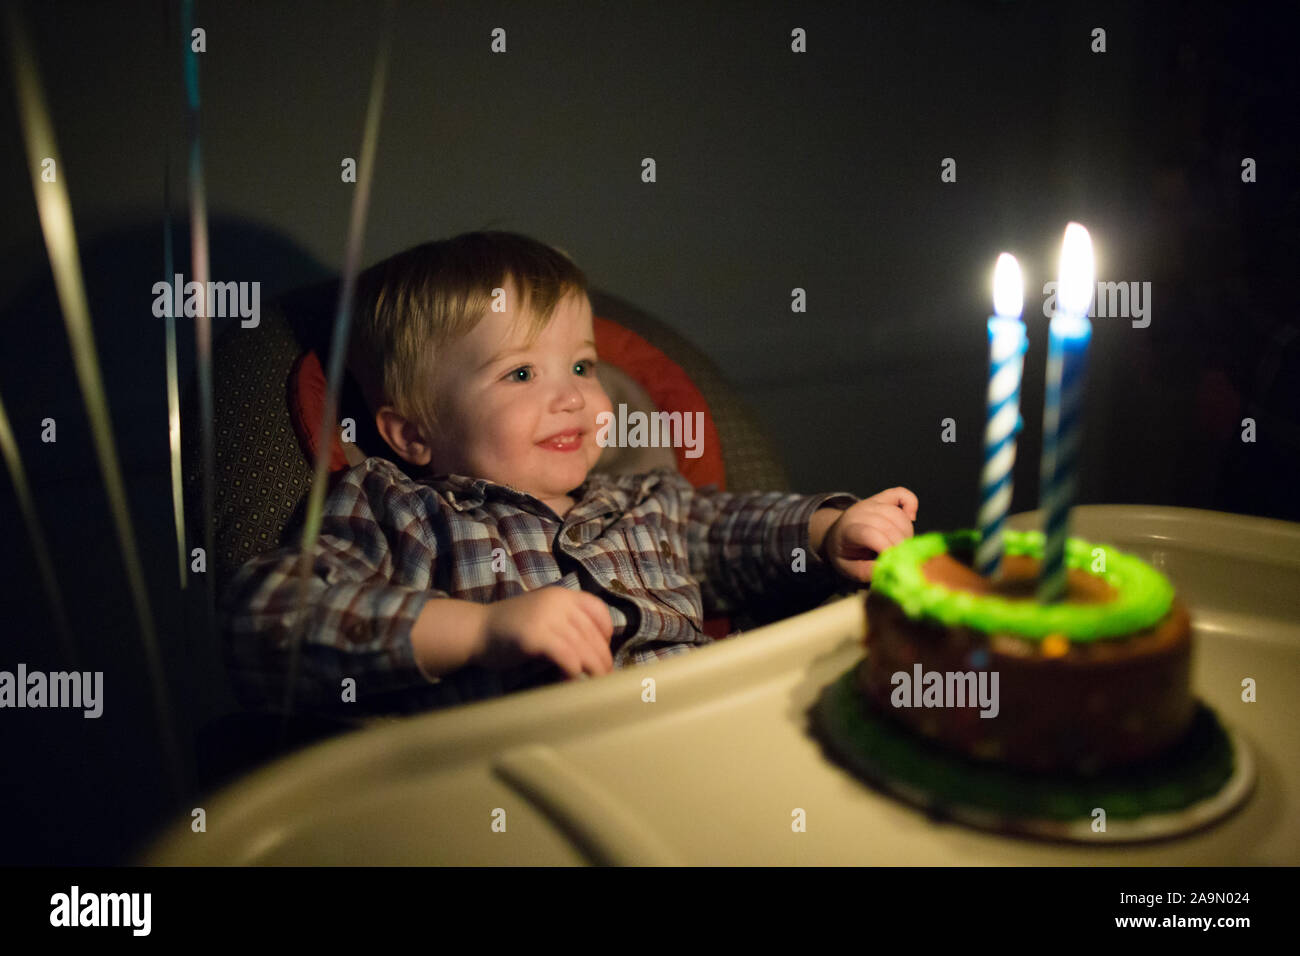 Toddler boy smiles at lit birthday candles on small birthday cake Stock Photo